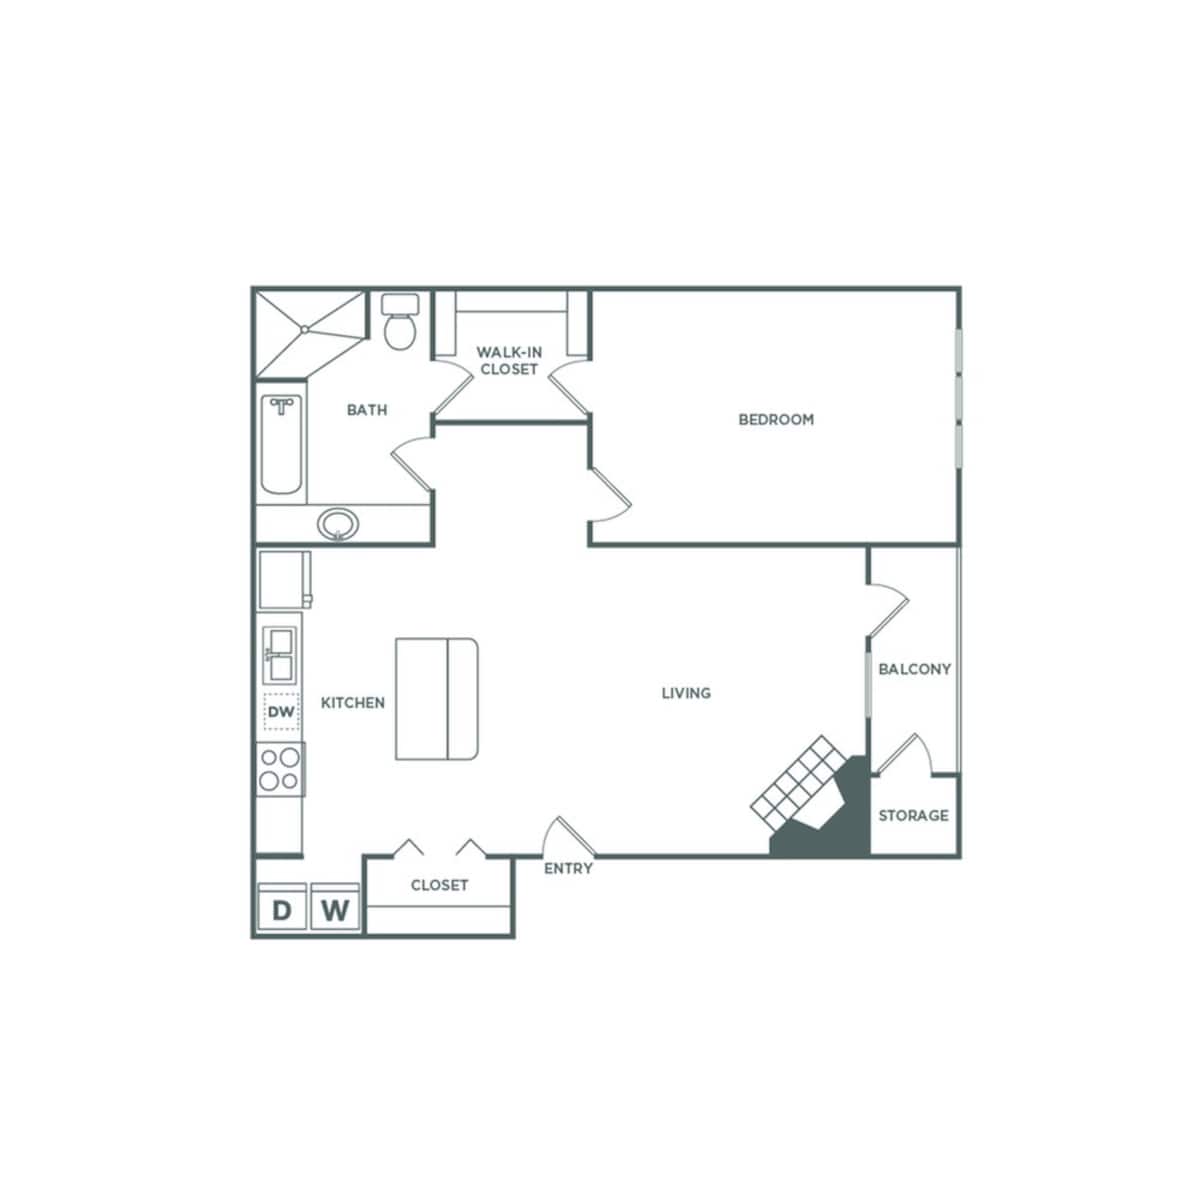 Floorplan diagram for One Bedroom One Bath (700 SF), showing 1 bedroom